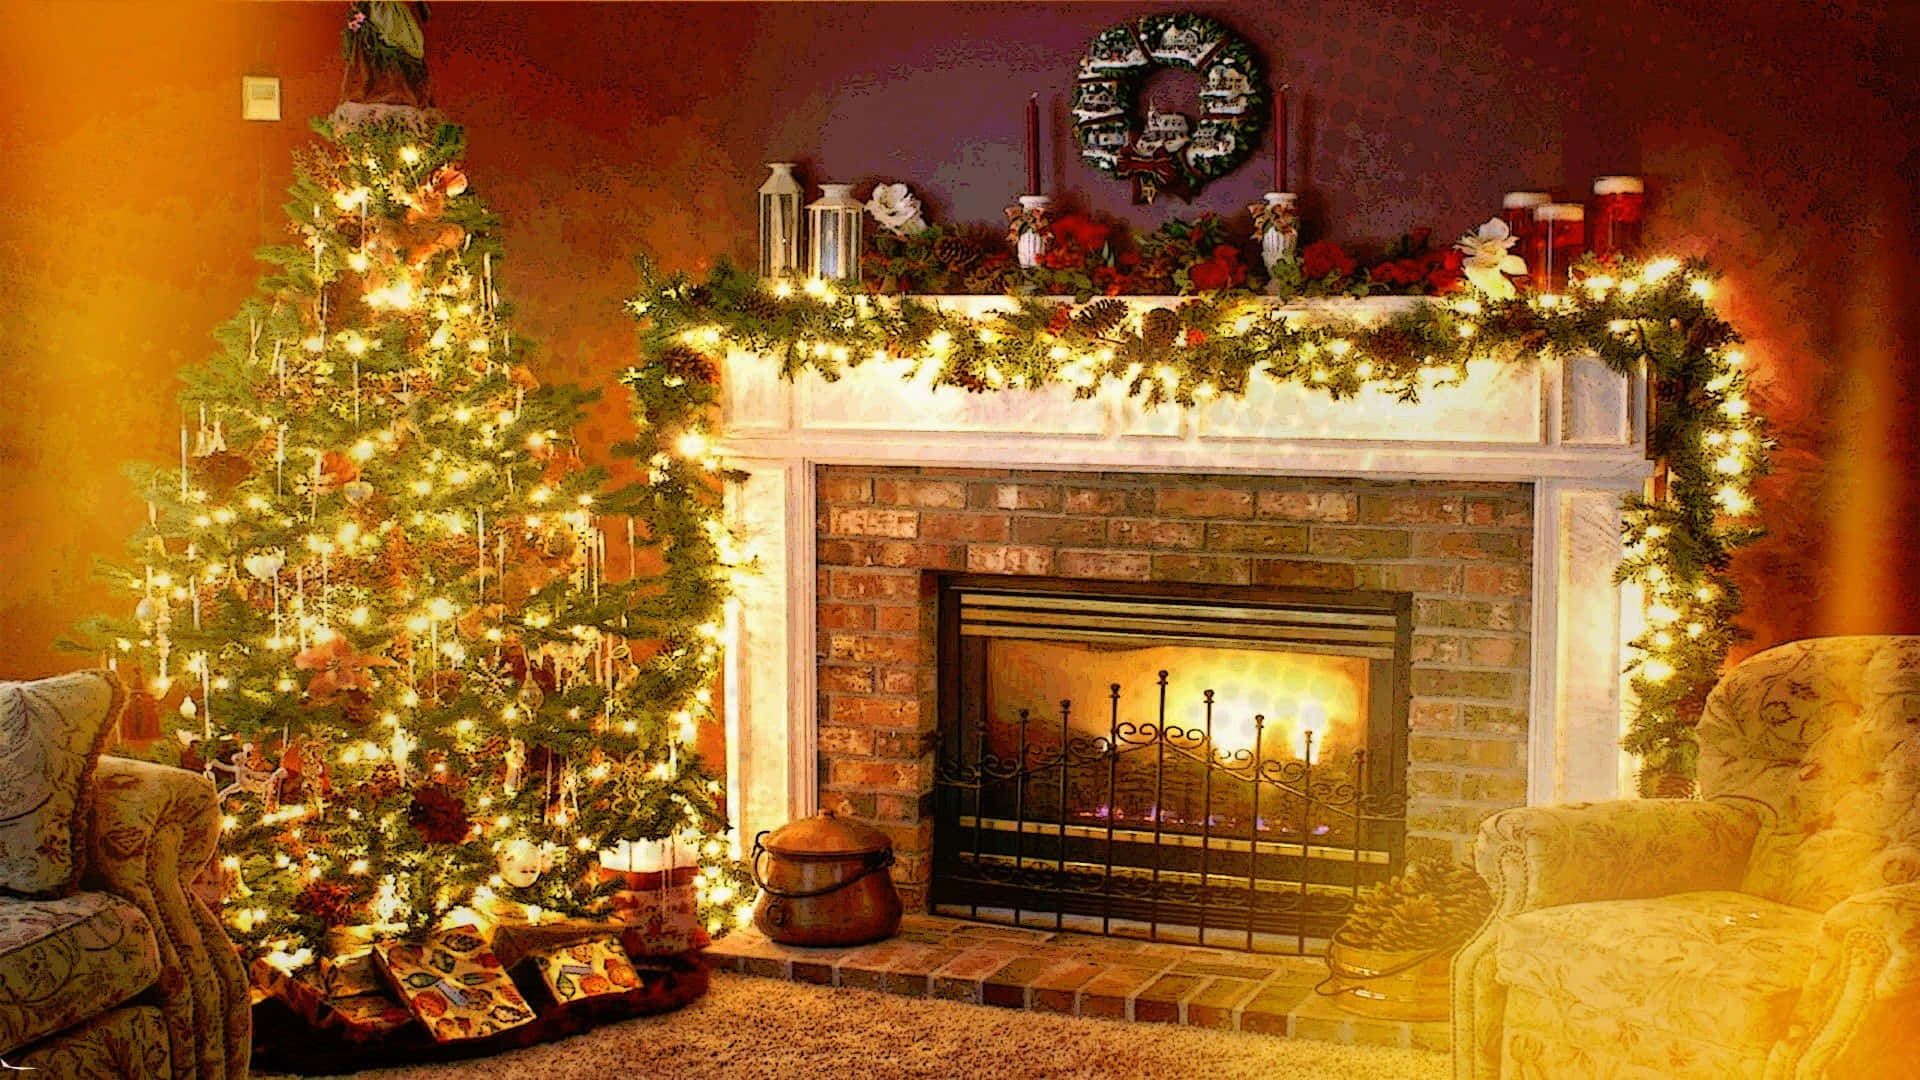 Cozy and Festive Christmas Living Room